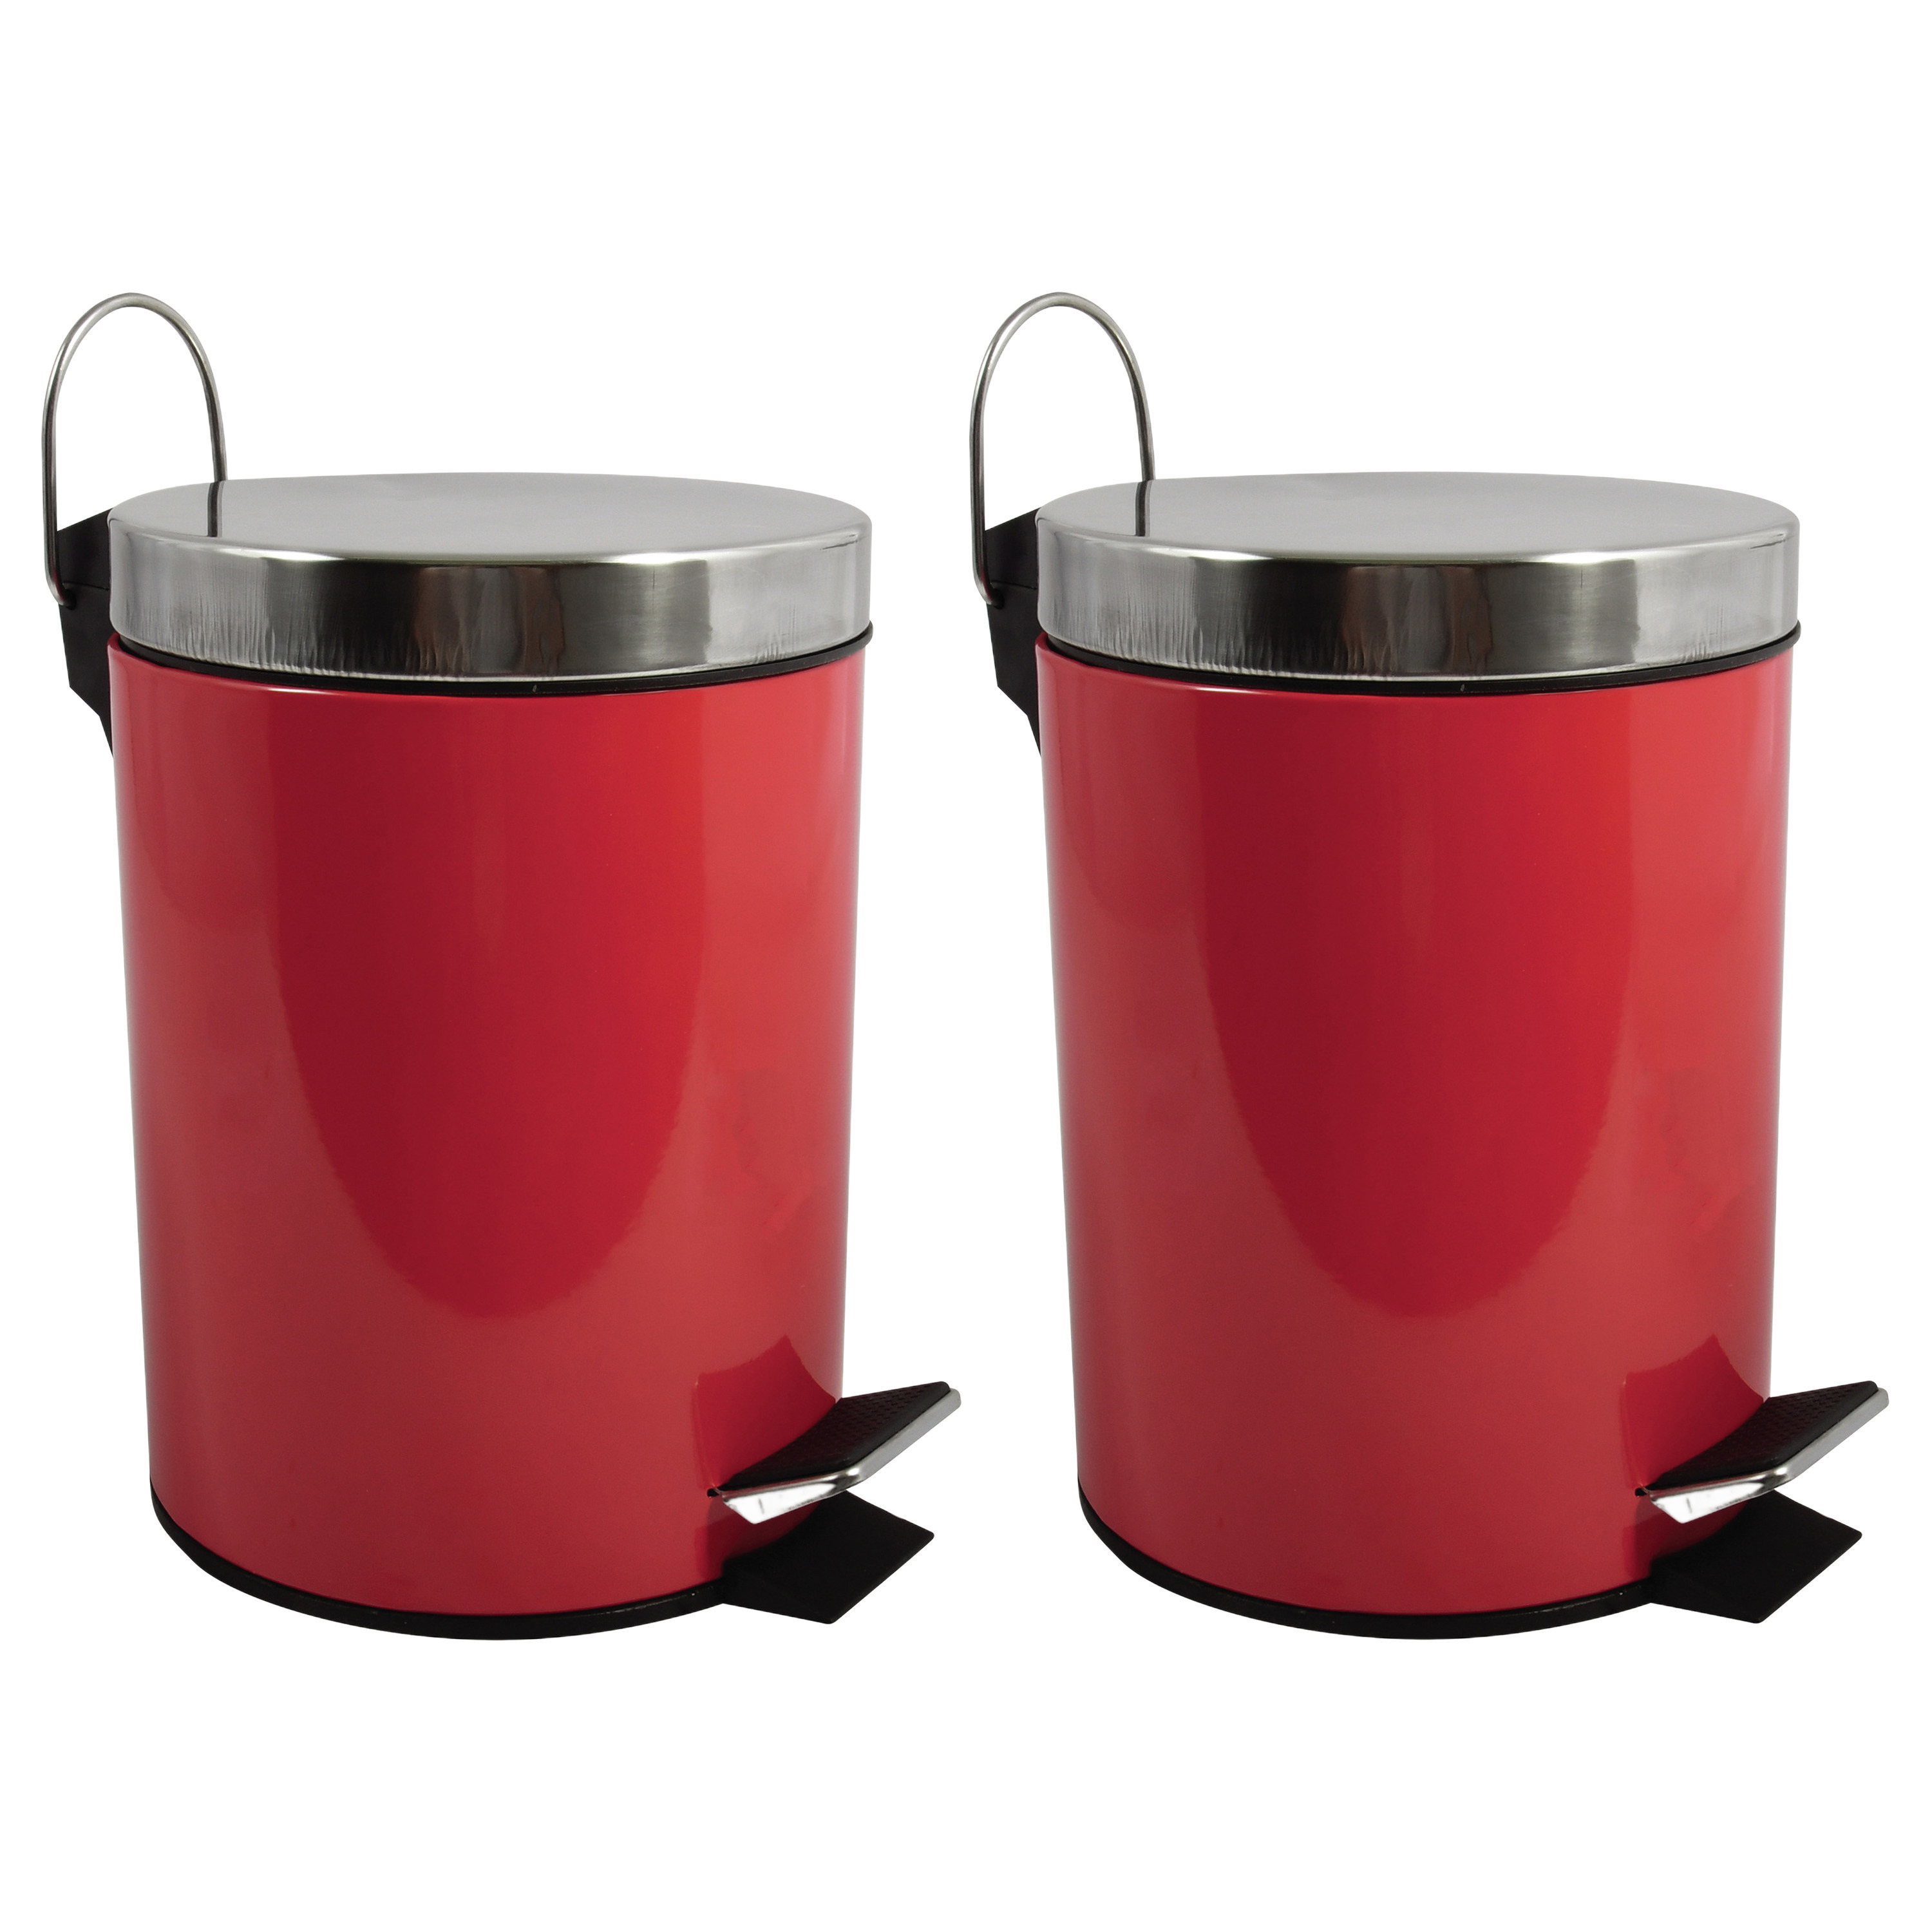 Prullenbak-pedaalemmer 2x metaal rood 3 liter 17 x 25 cm Badkamer-toilet